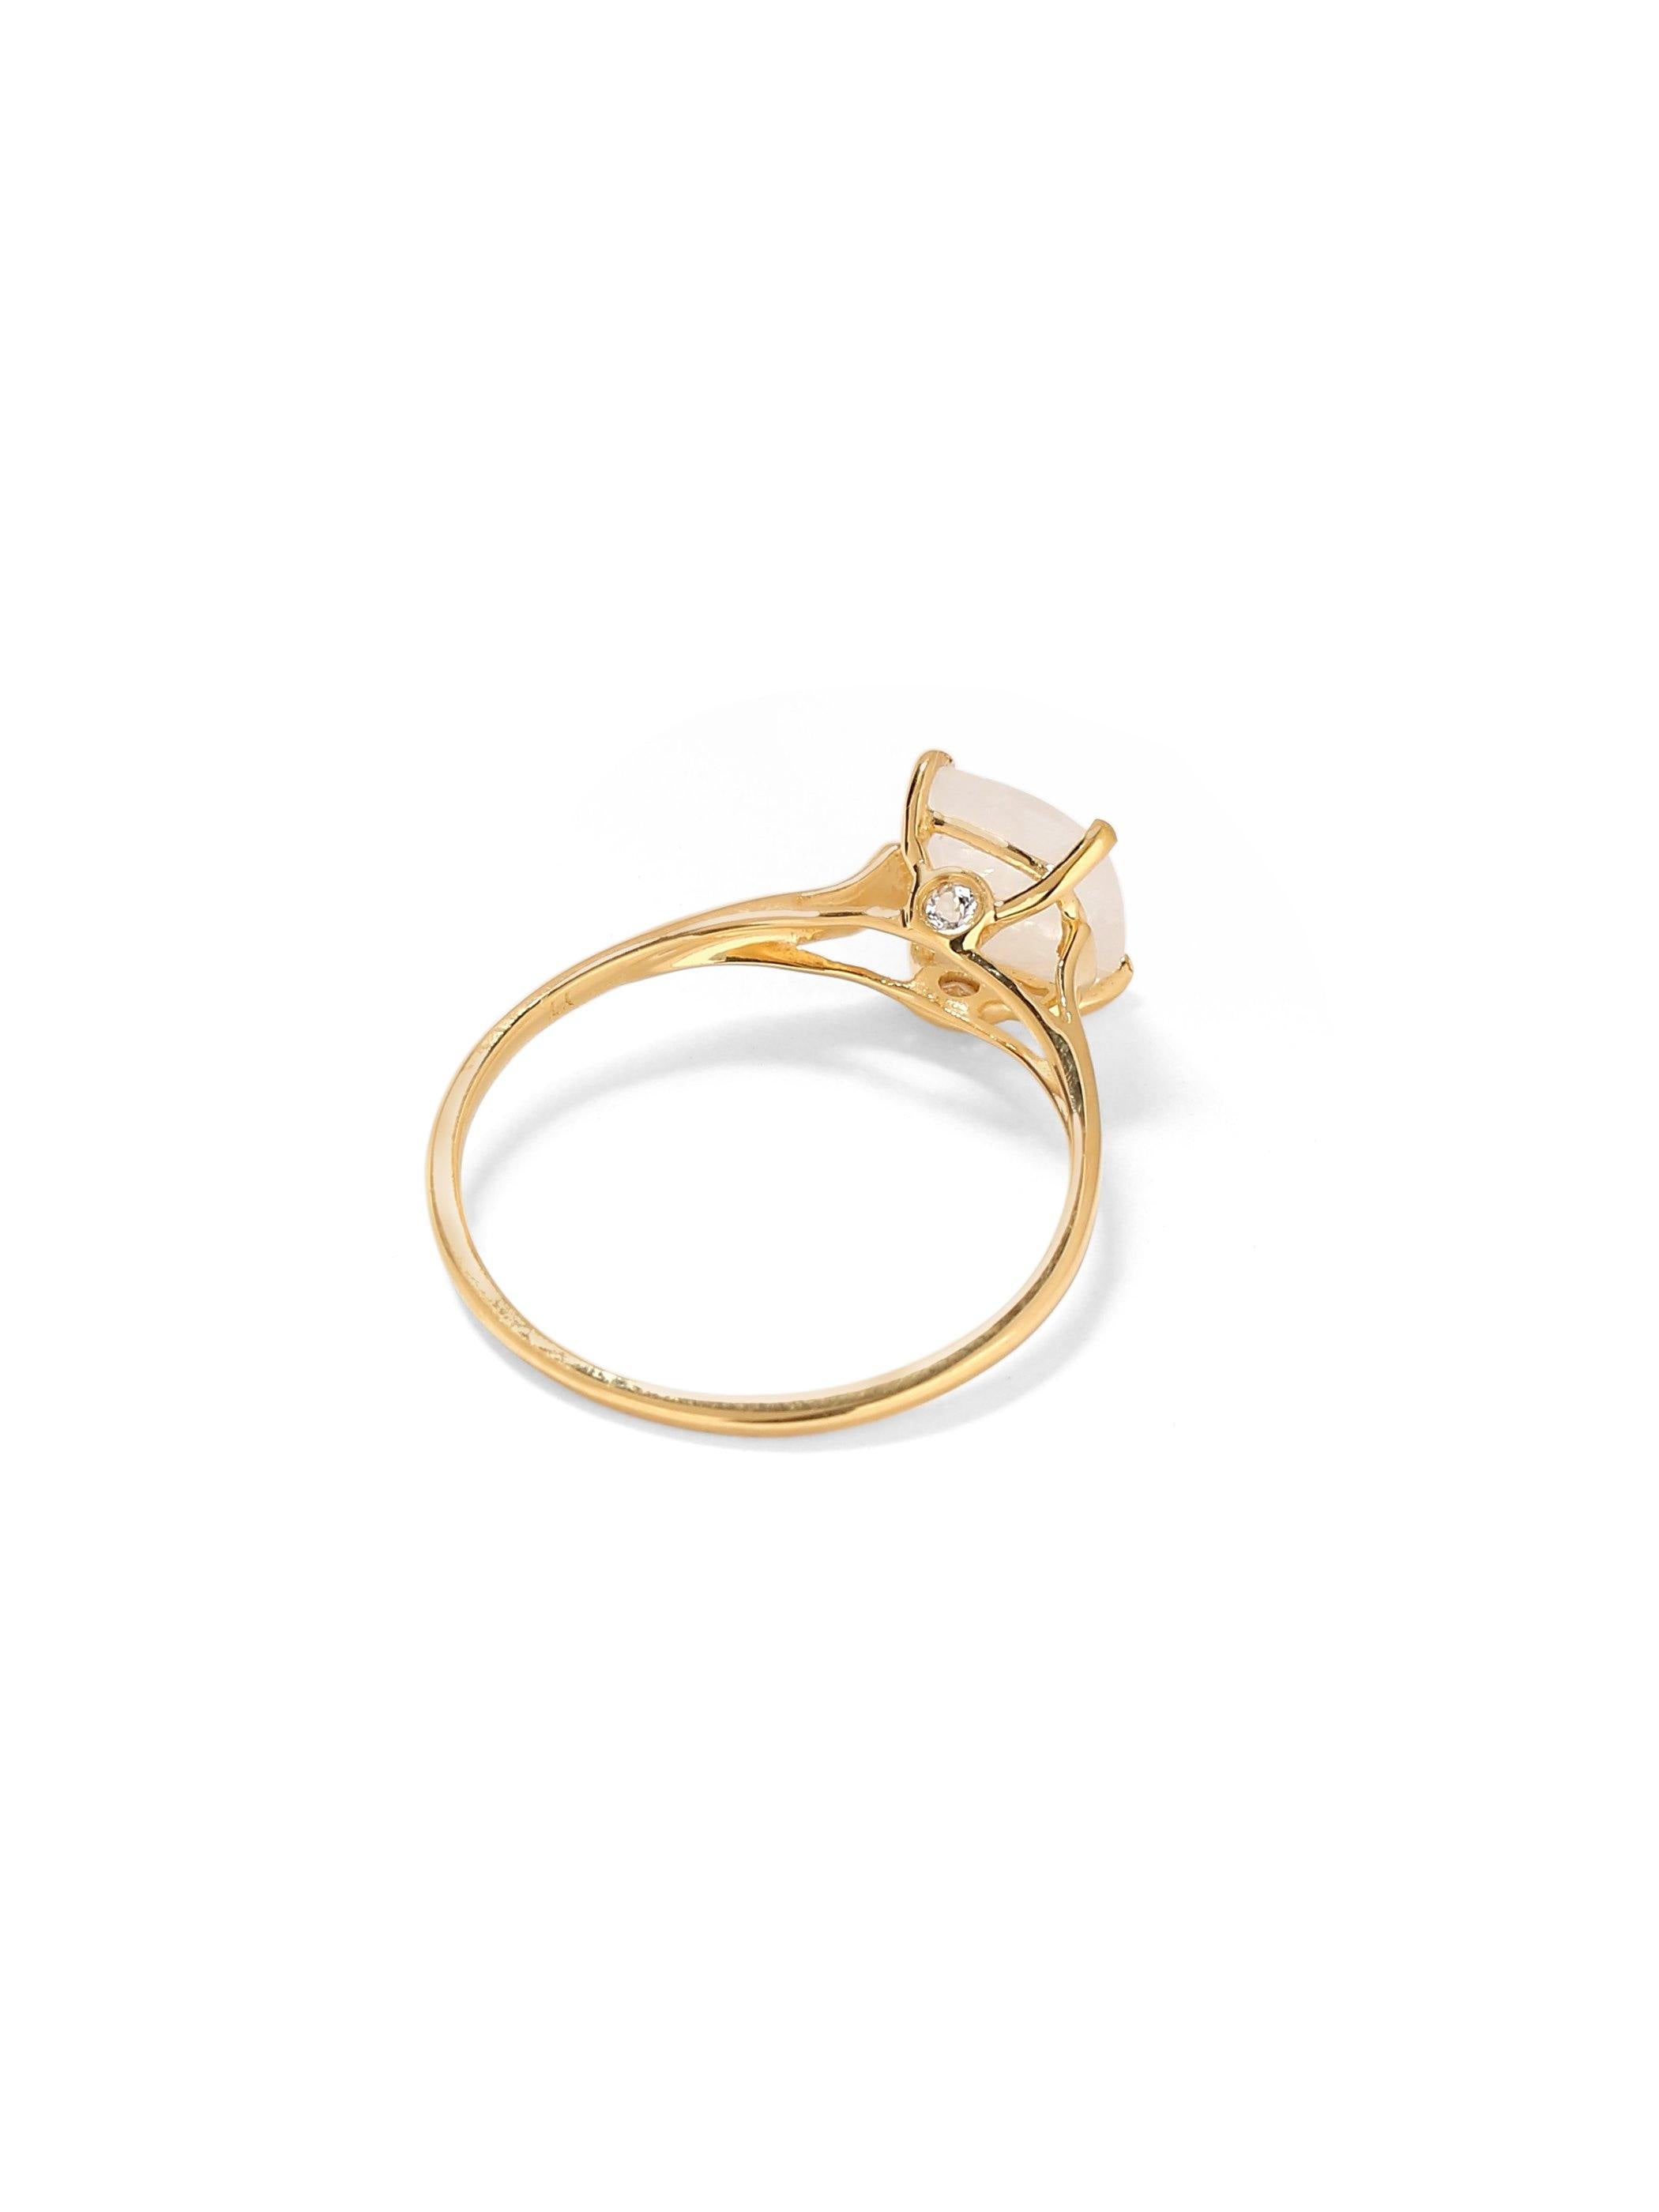 1.88 Cts Rainbow Moonstone Solid 10k Yellow Gold Ring Jewelry - YoTreasure